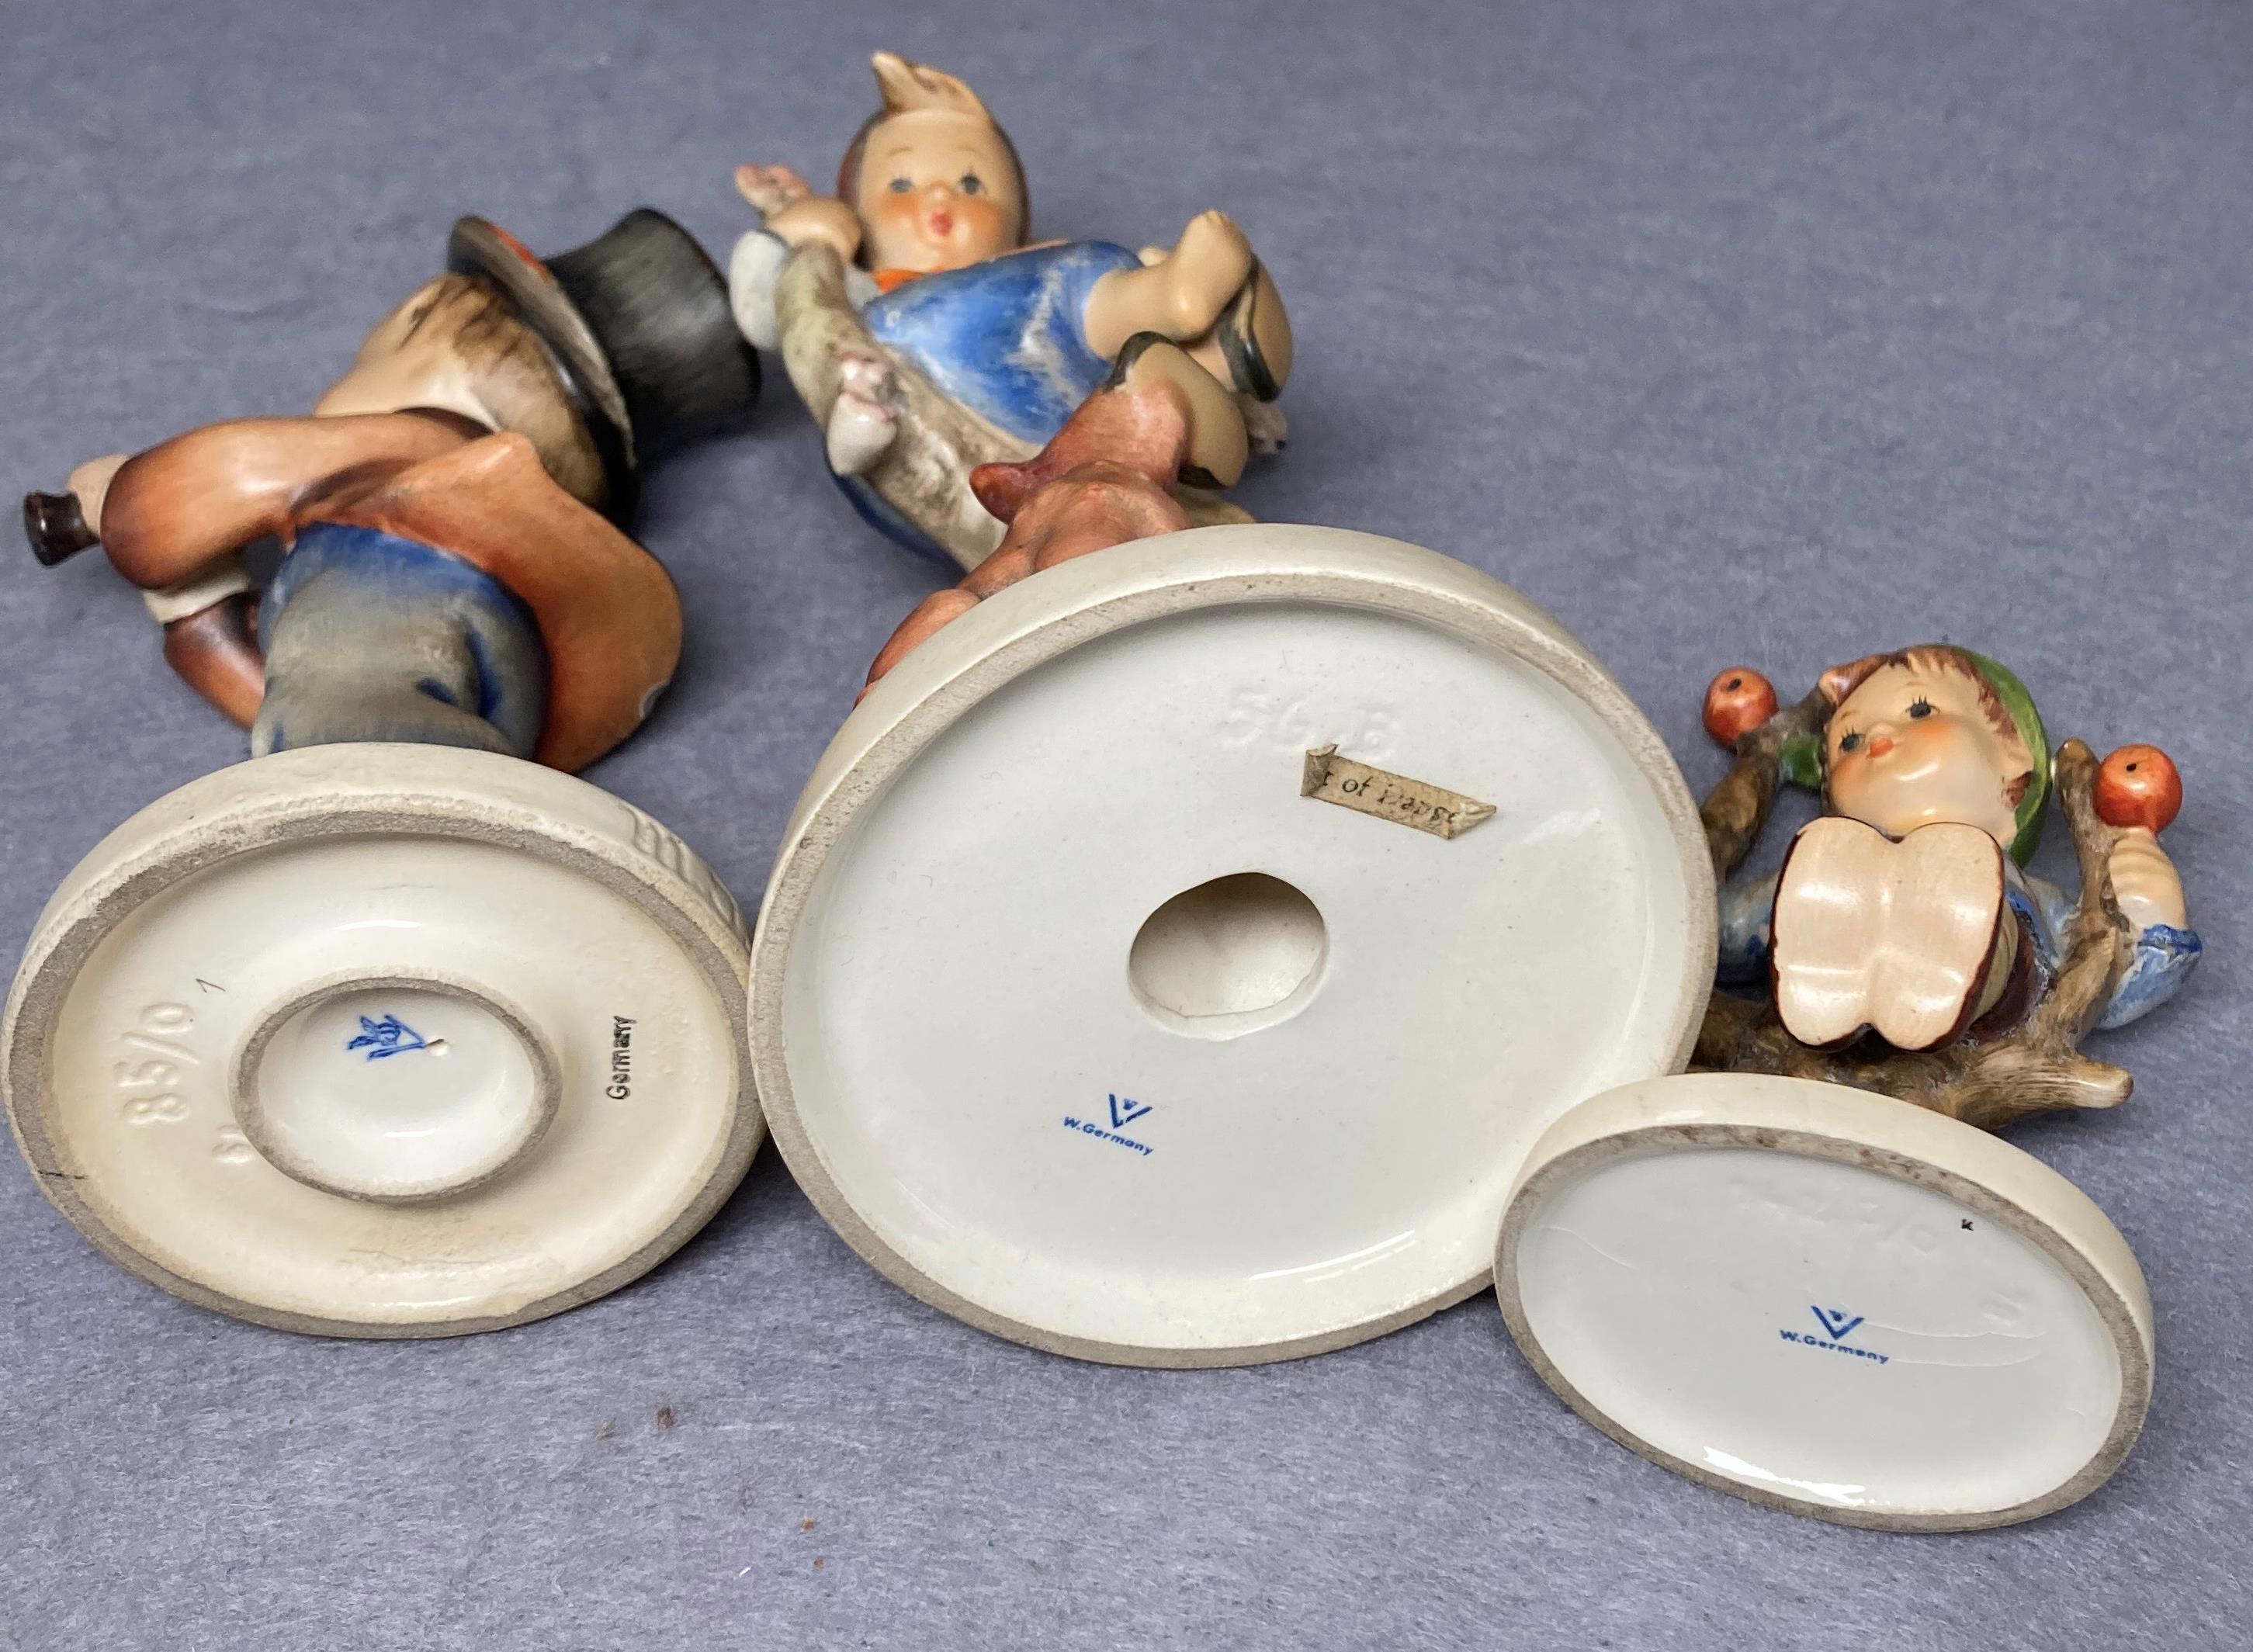 Six 20th Century Hummel ceramic figurines (one has been repaired) (saleroom location: S3 QC17 GC) - Image 4 of 5